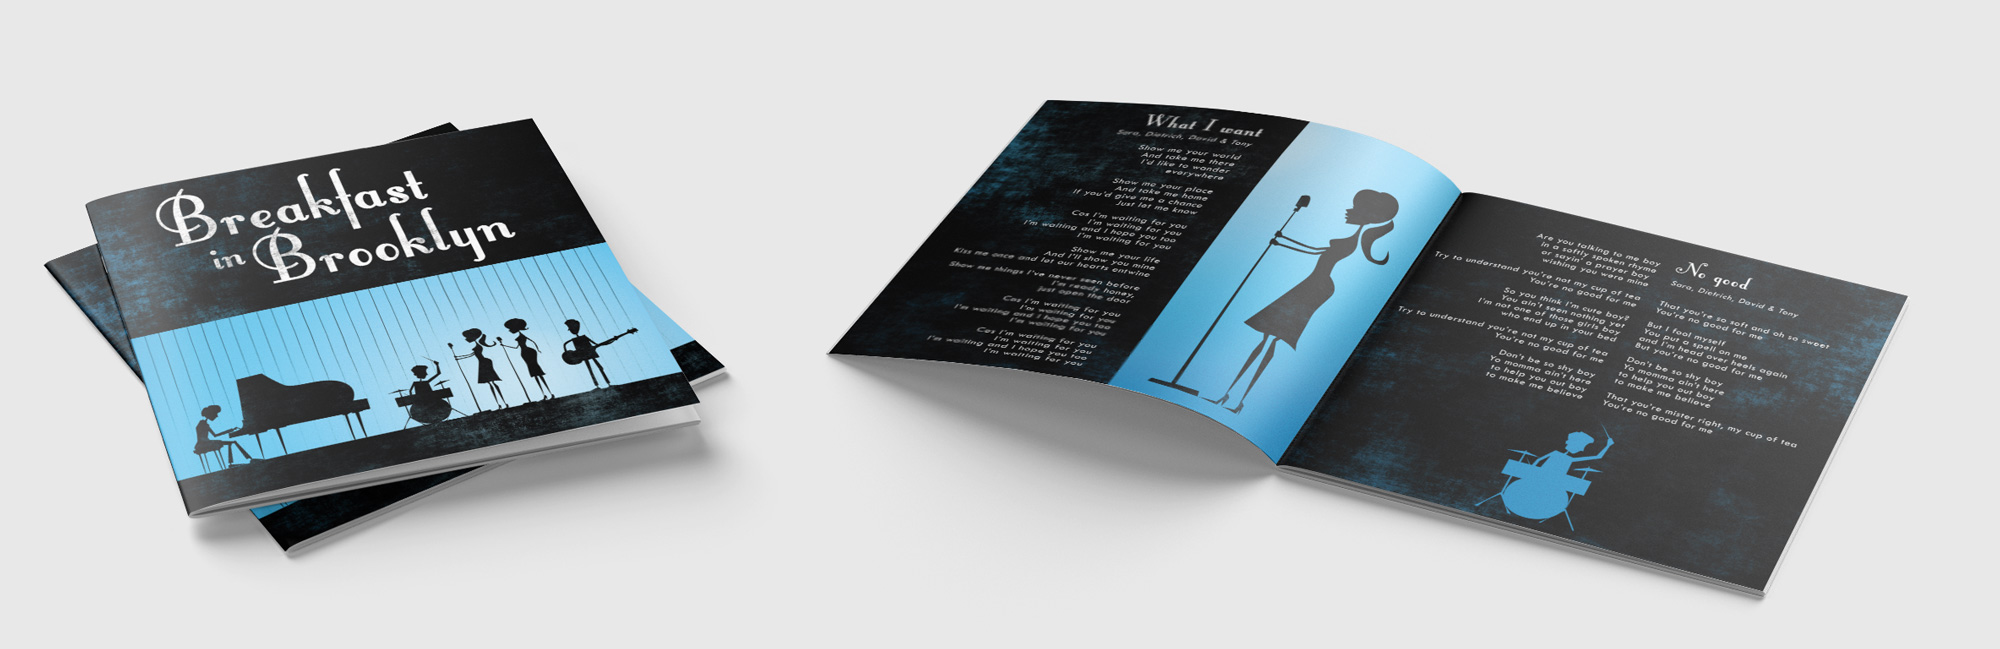 Greyclouds.be - Bert Blondeel | Design for print: book cover